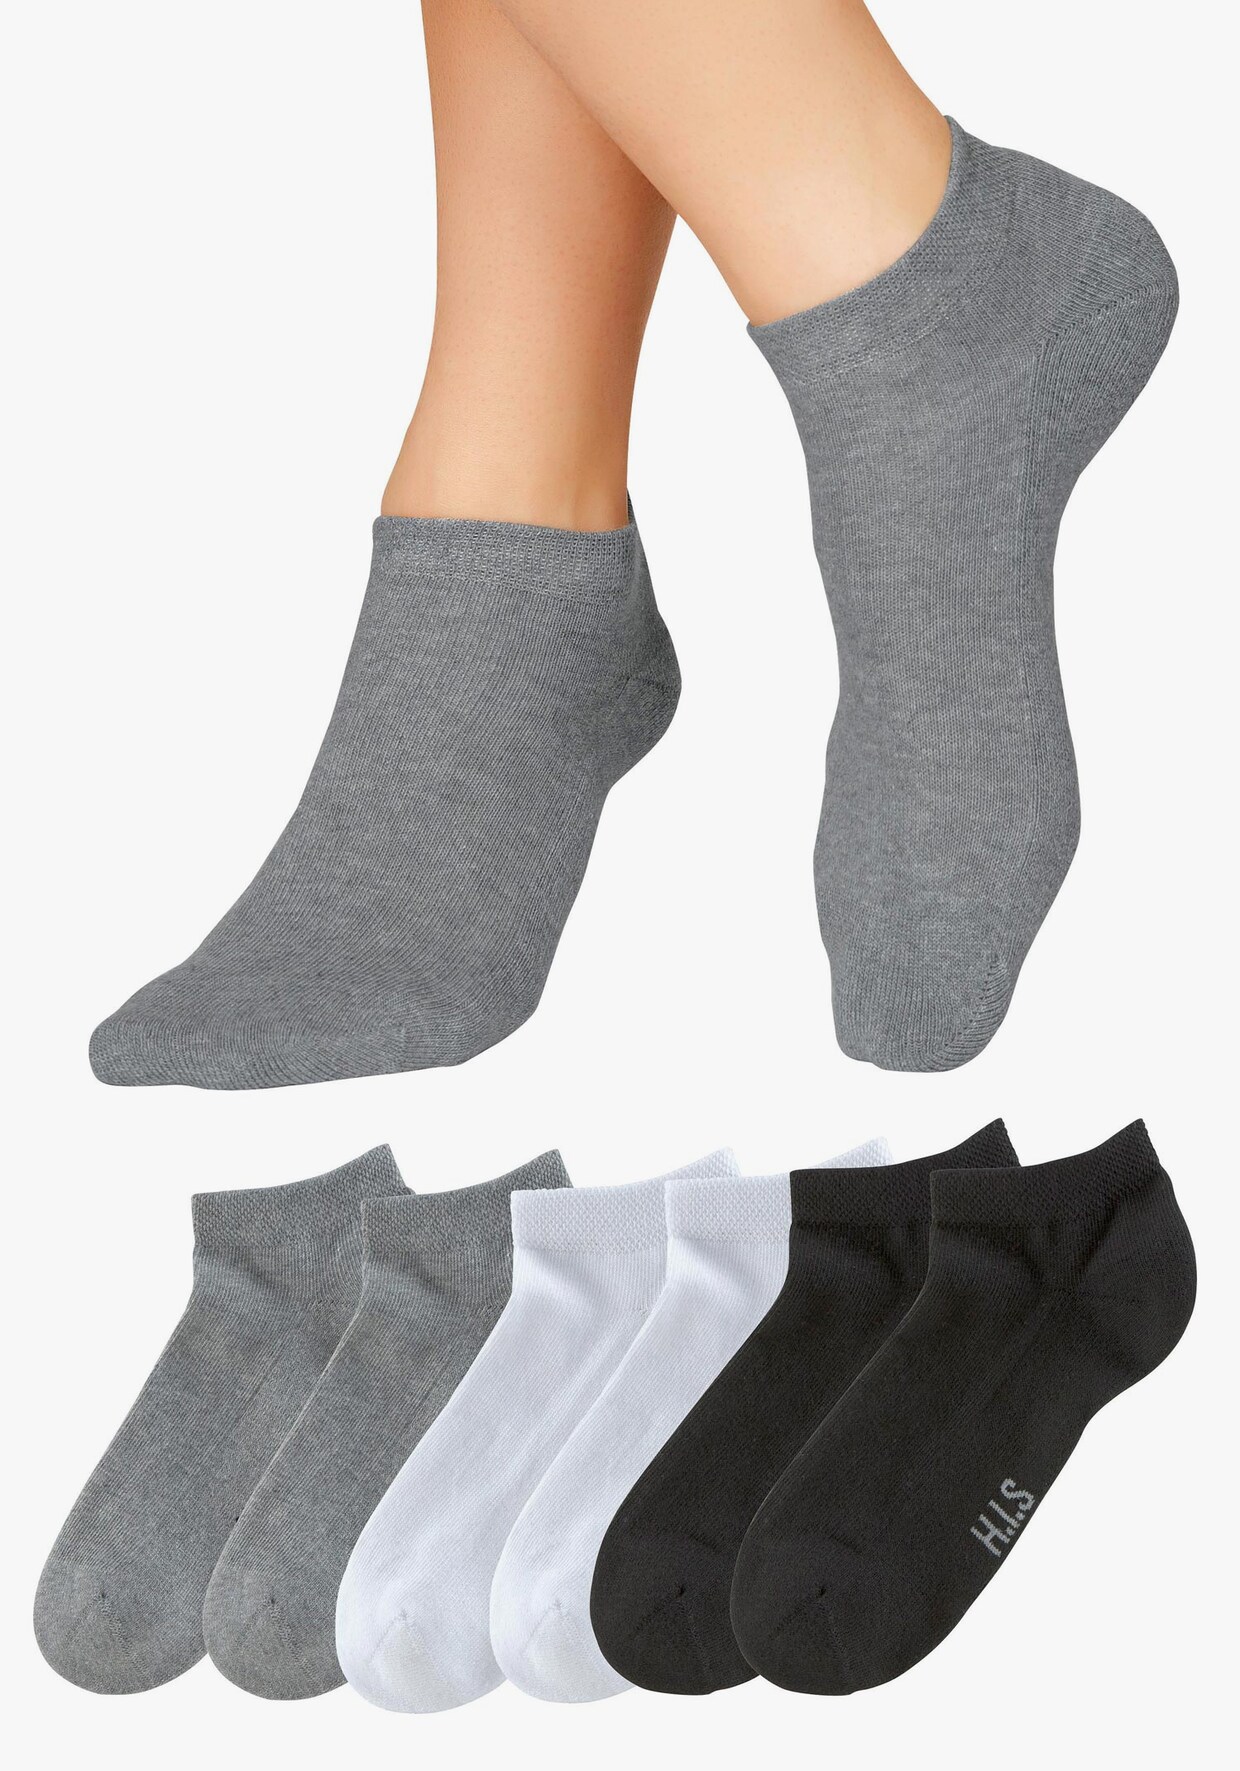 H.I.S Sneakersocken - 2x schwarz + 2x weiß + 2x grau-meliert